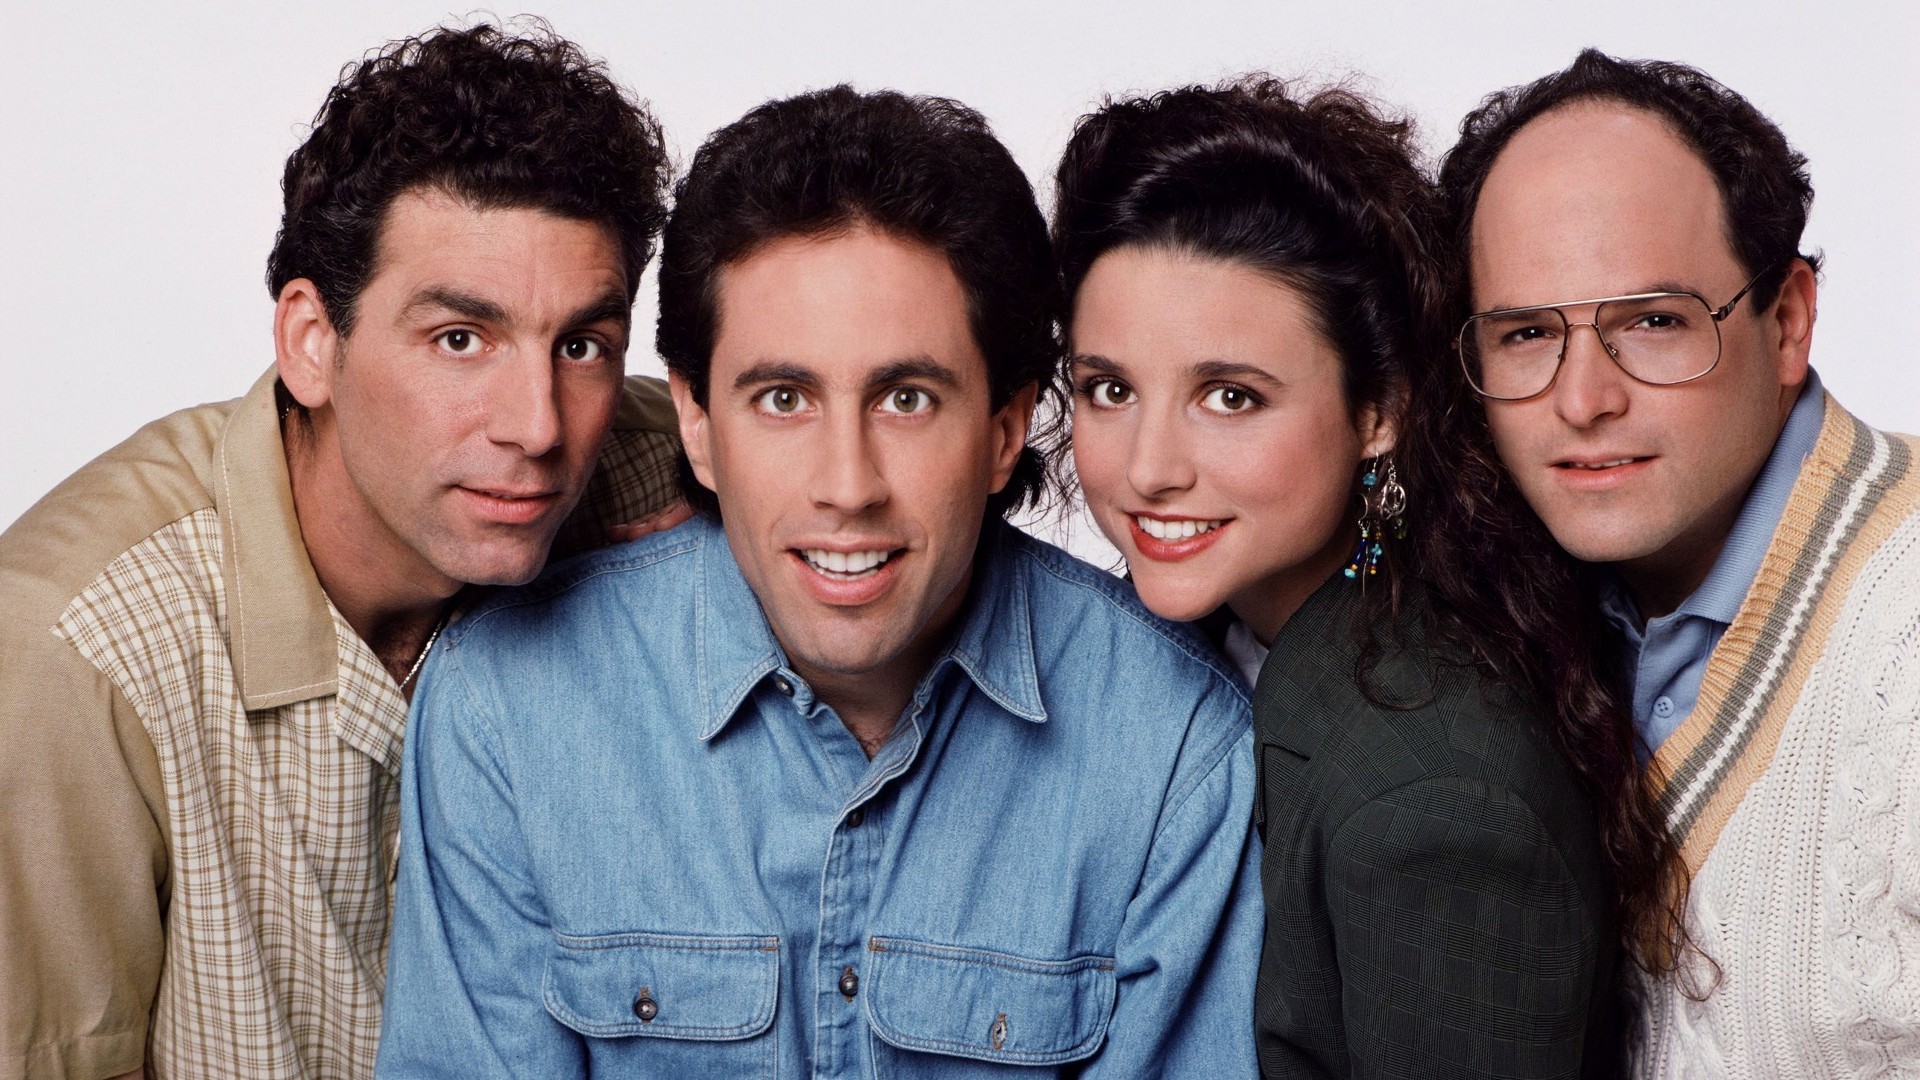 Seinfeld • TV Show (1989 - 1998)